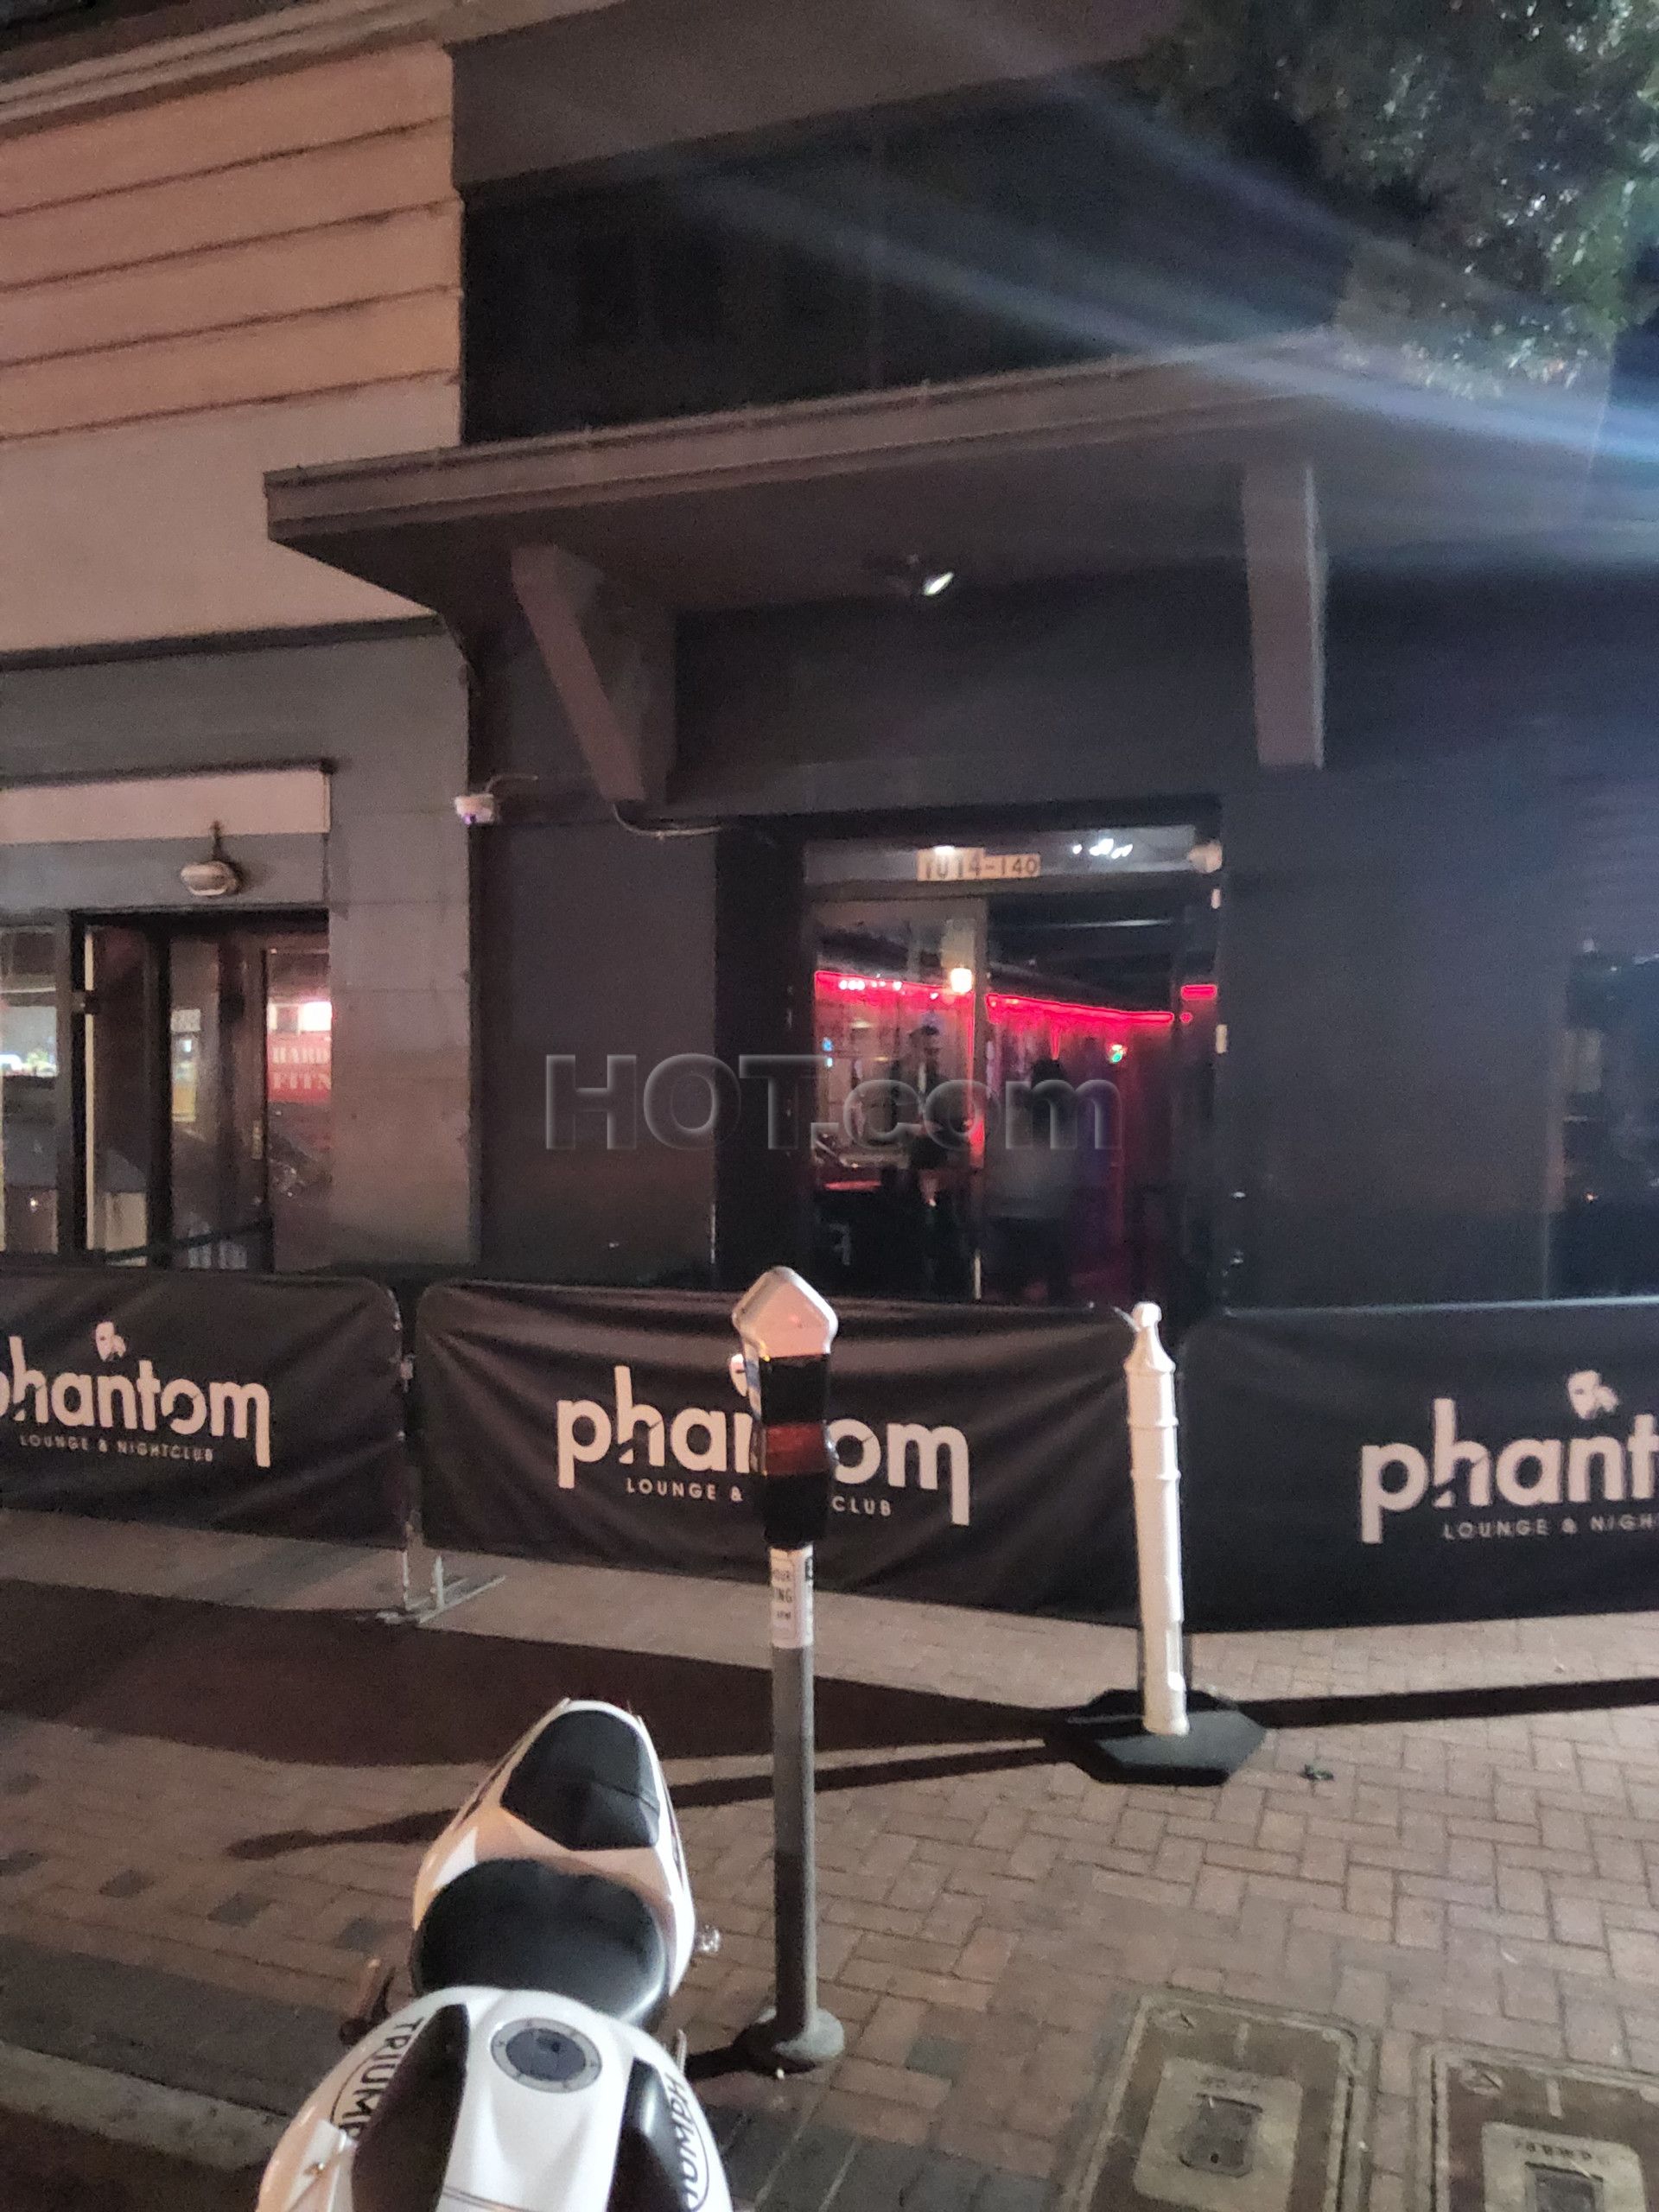 San Diego, California Phantom Lounge and Nightclub